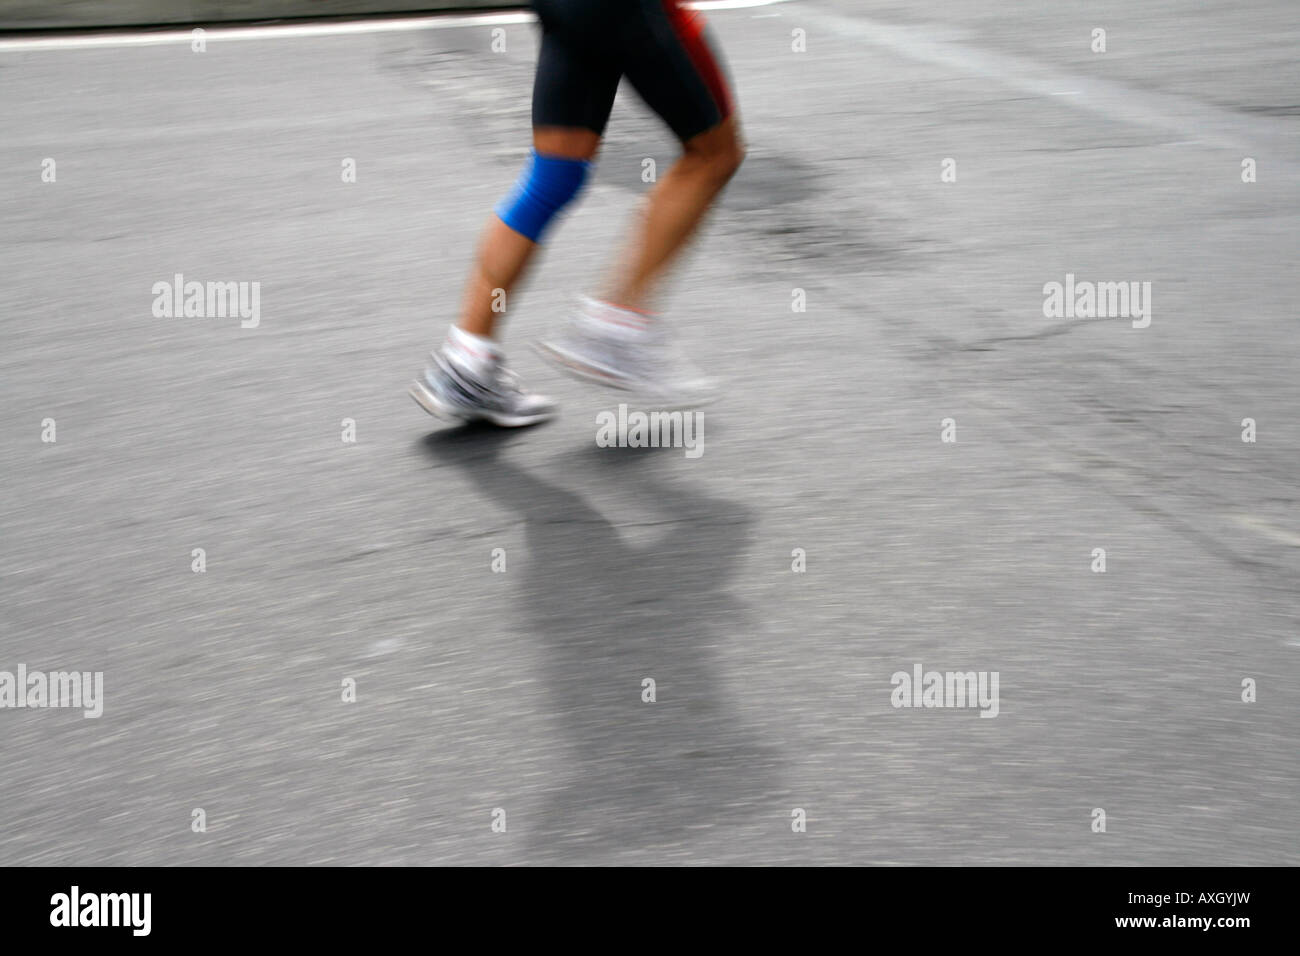 runner in road race Stock Photo